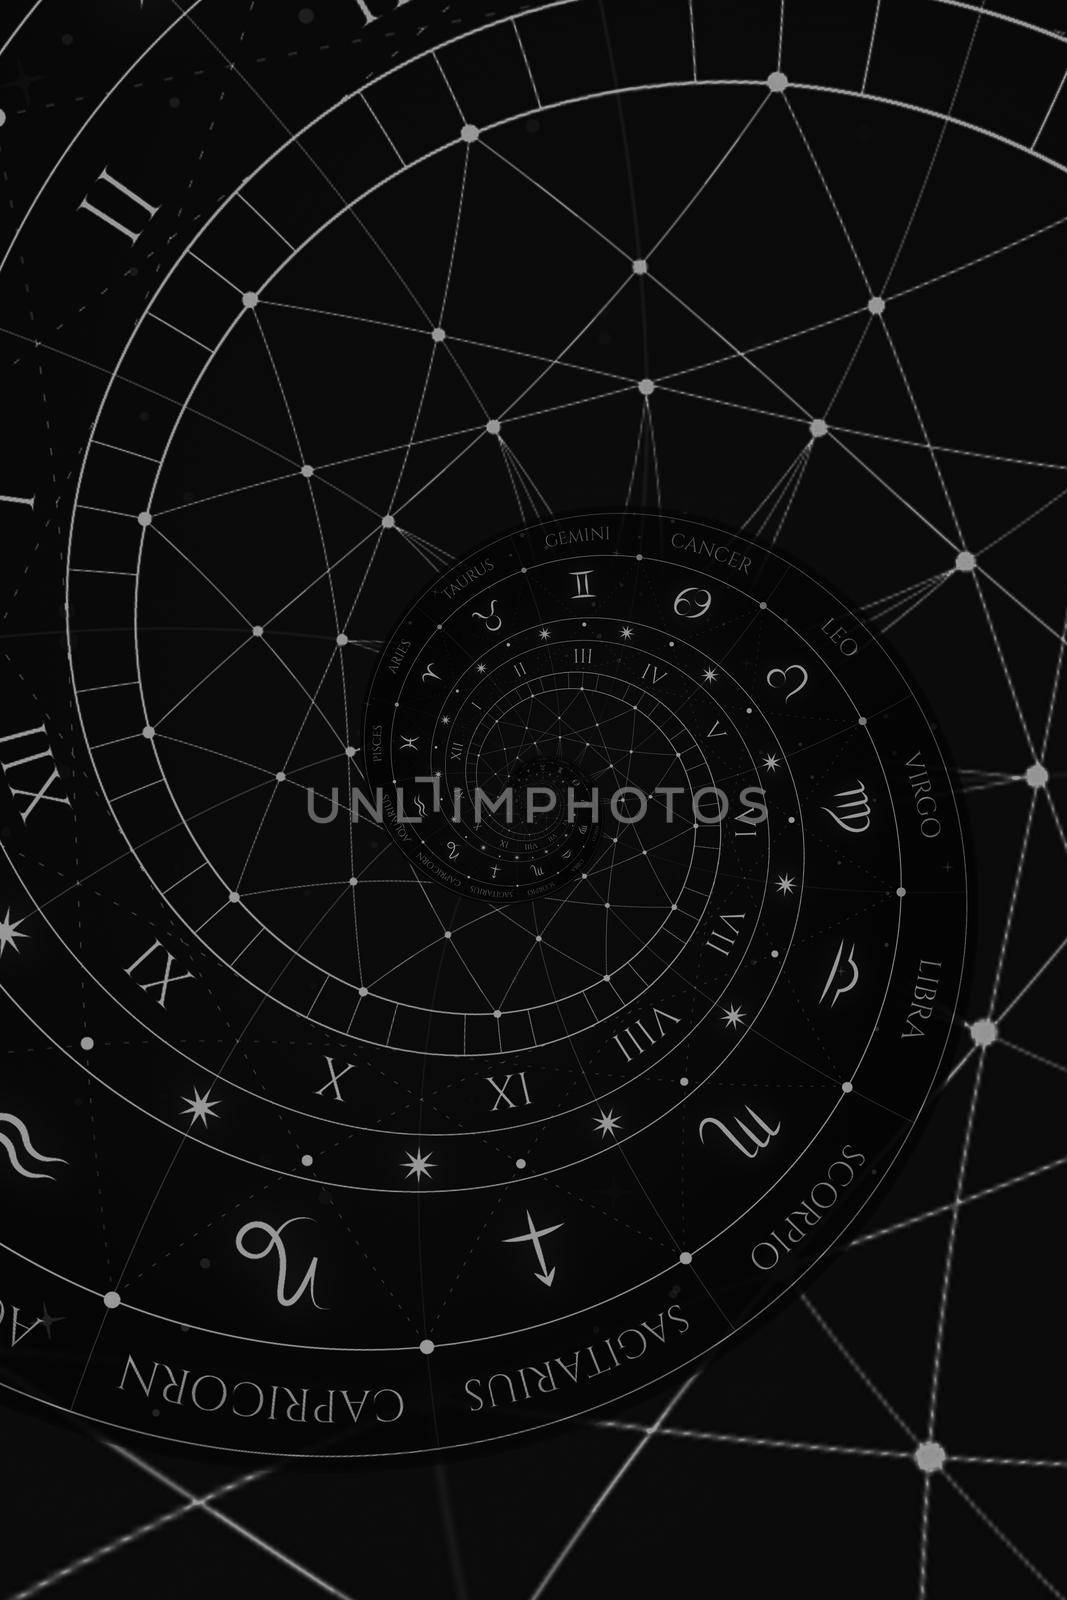 Astrology and alchemy sign background illustration - black